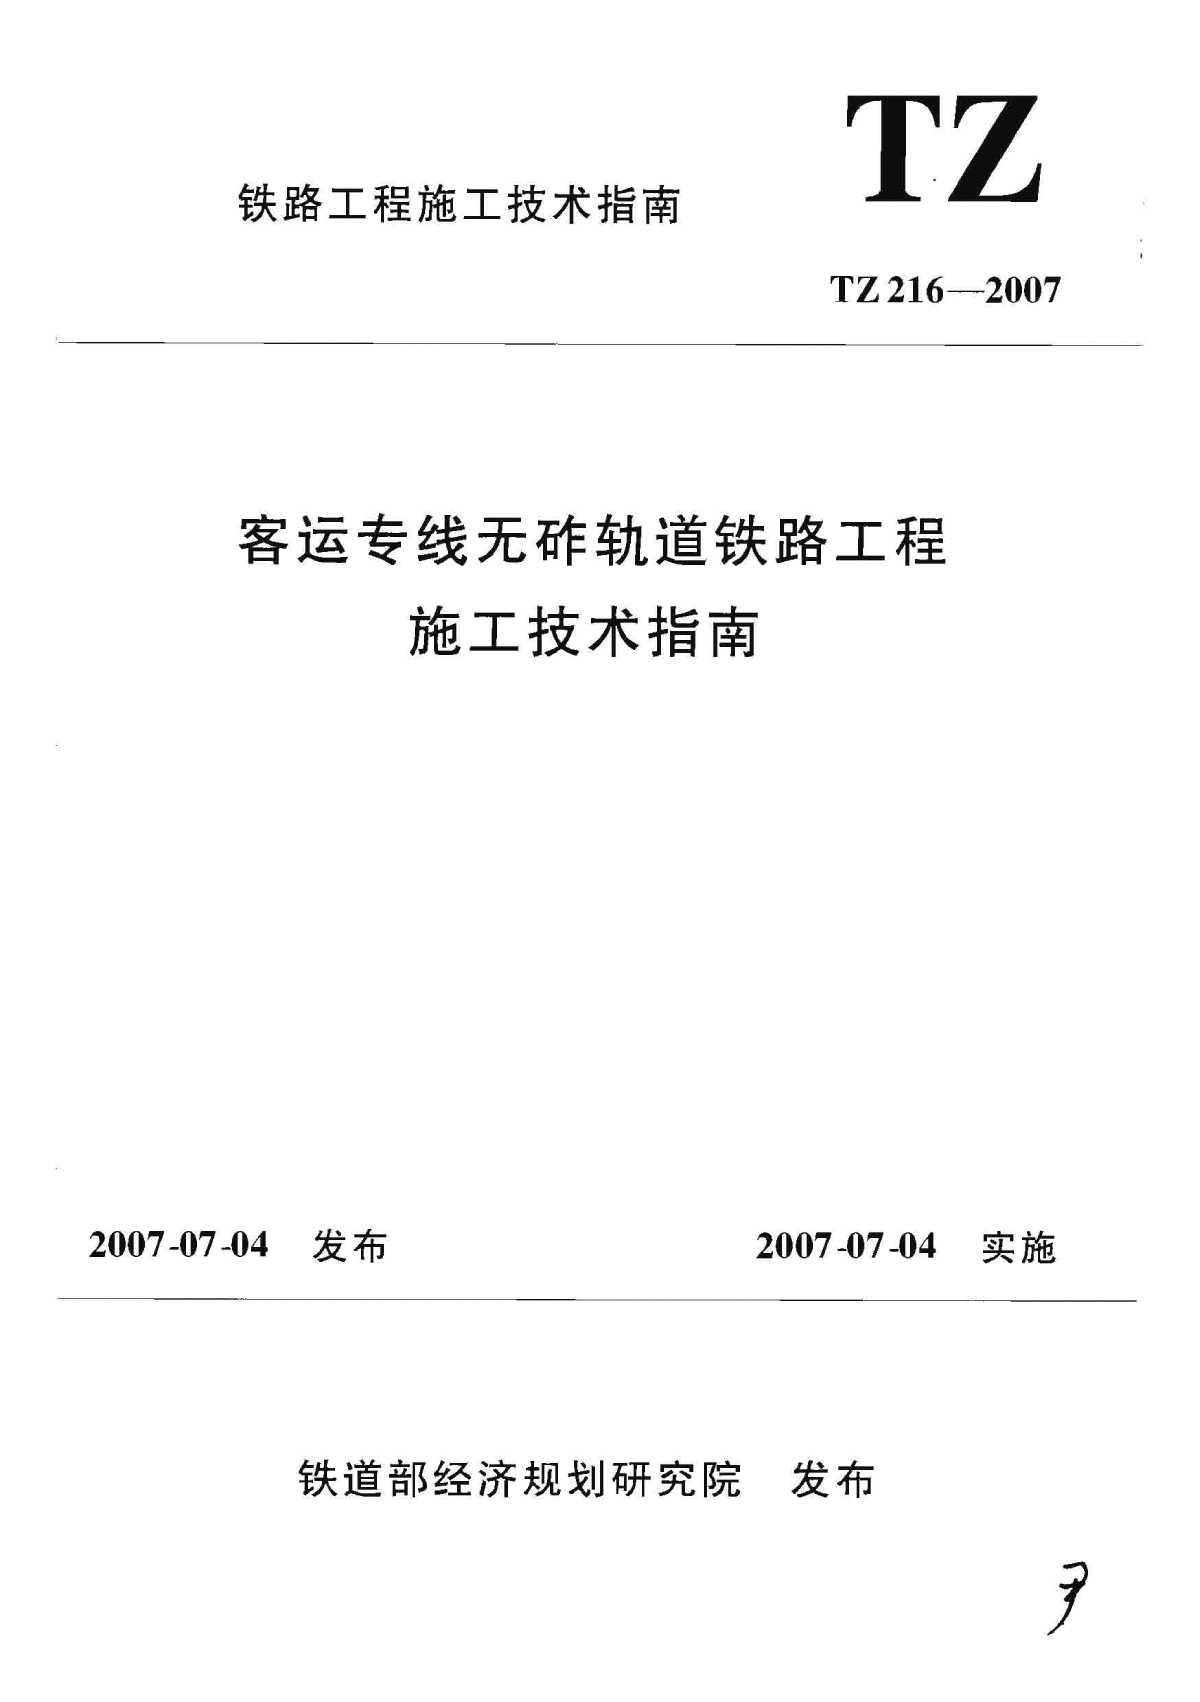 TZ 216-2007 客运专线无砟轨道铁路工程施工技术指南